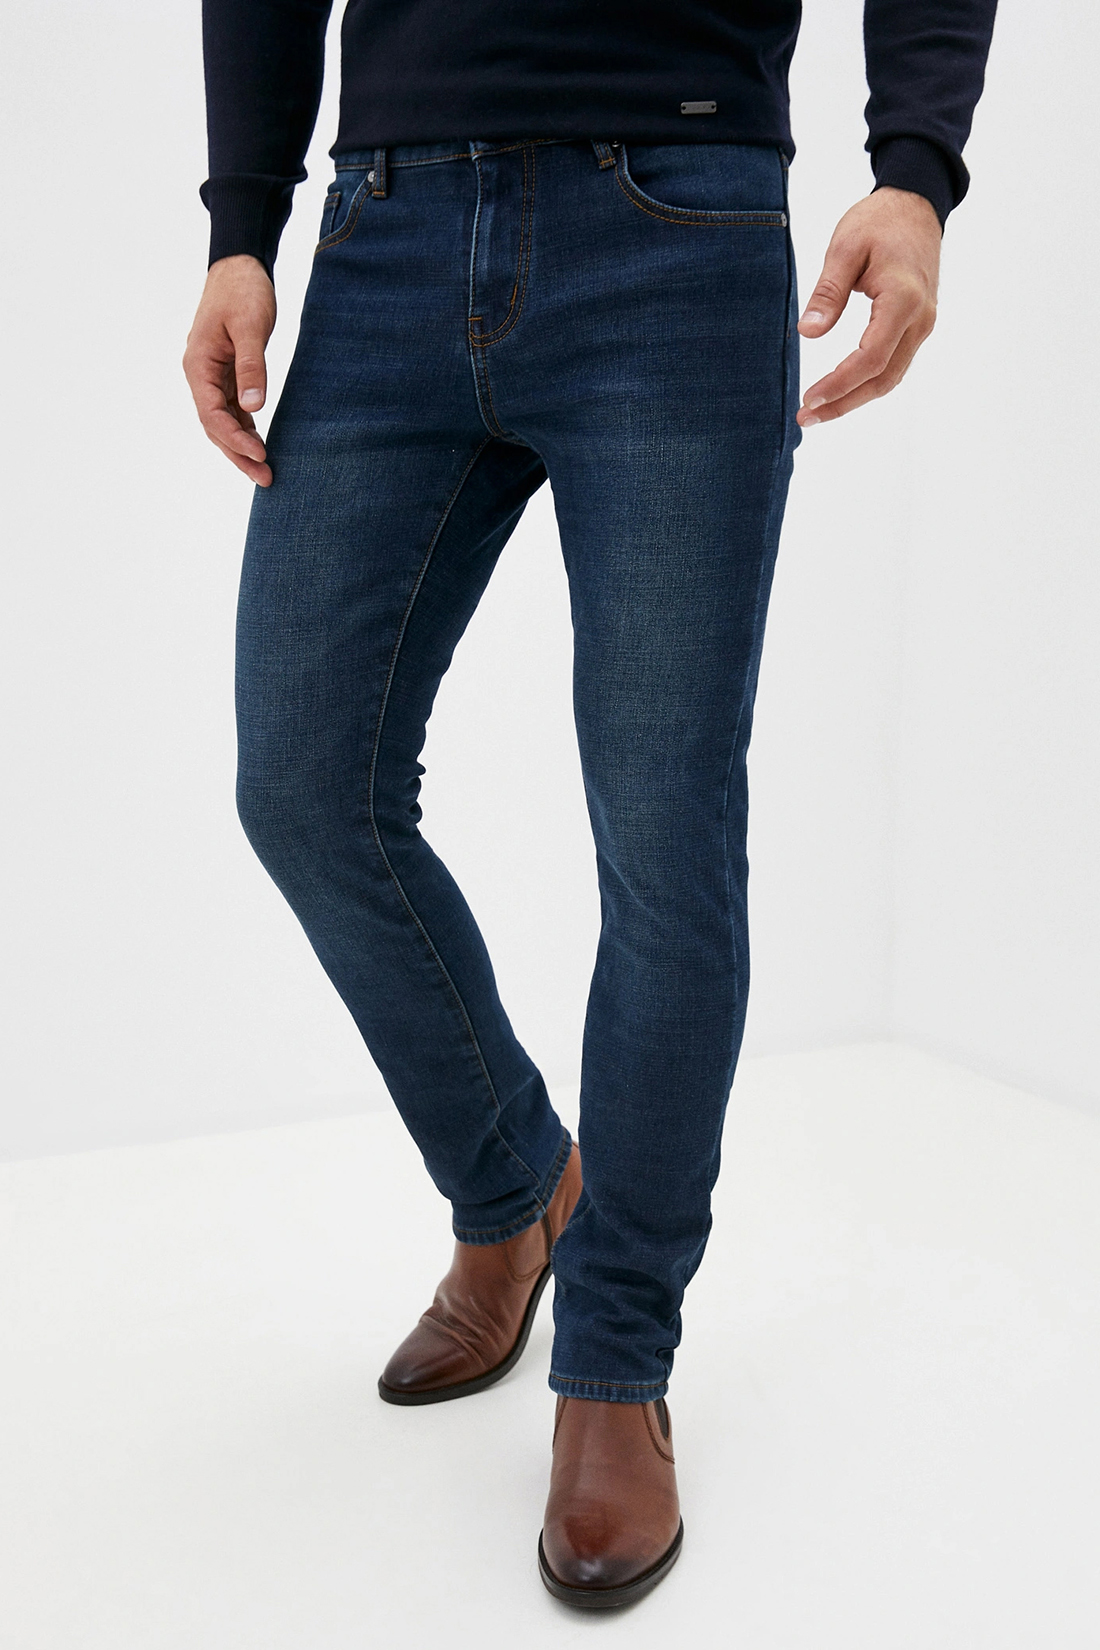 Утеплённые джинсы (арт. baon B800504), размер 30, цвет dark navy denim#синий